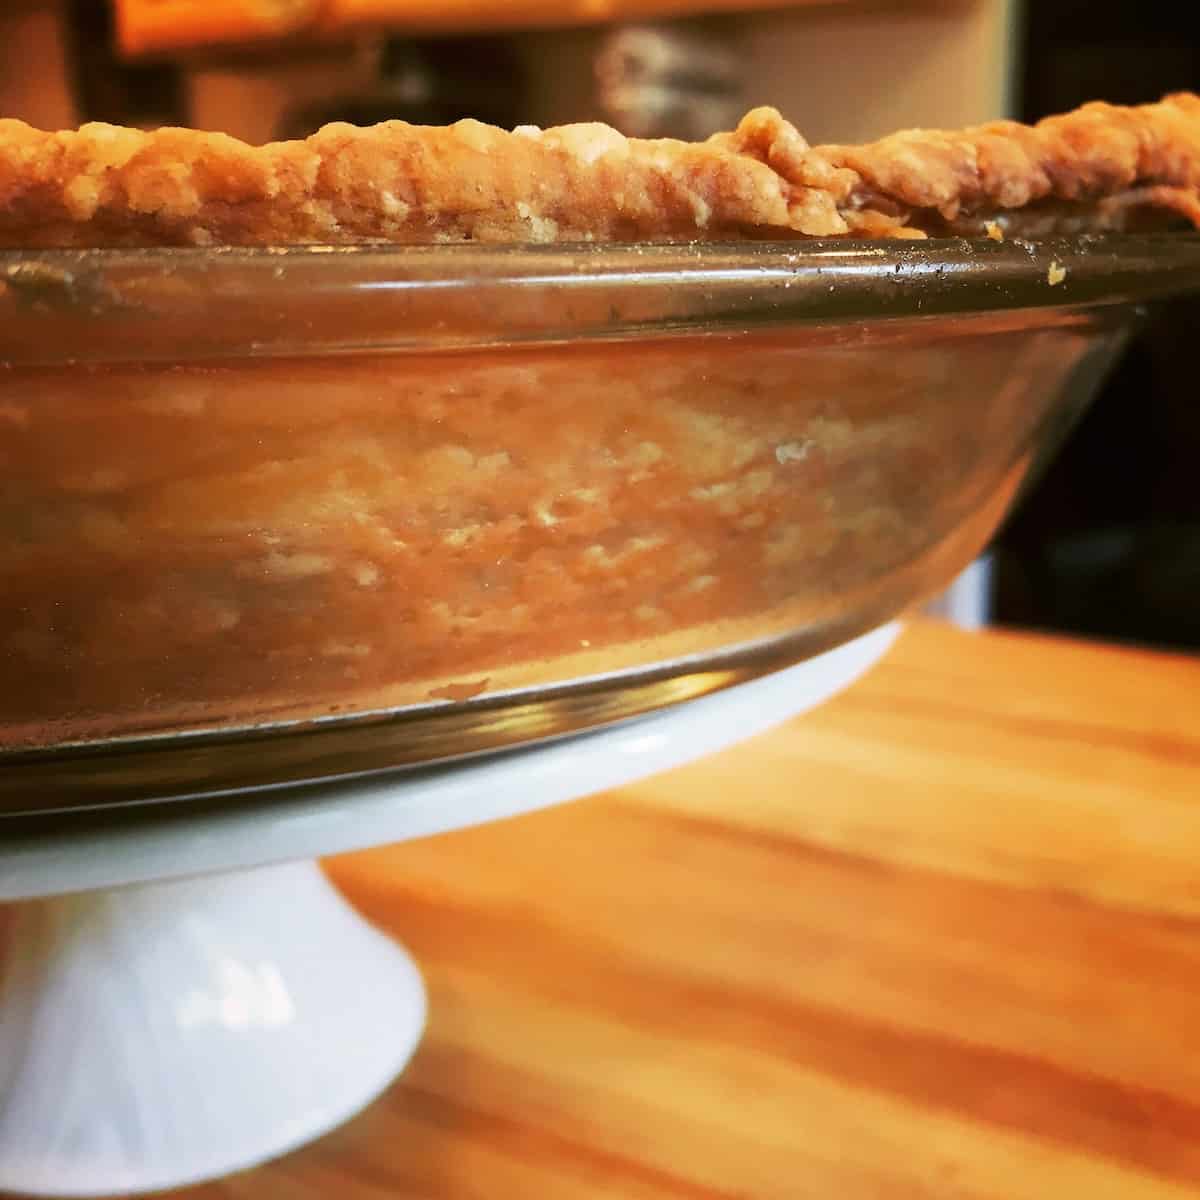 Baked pie crust.